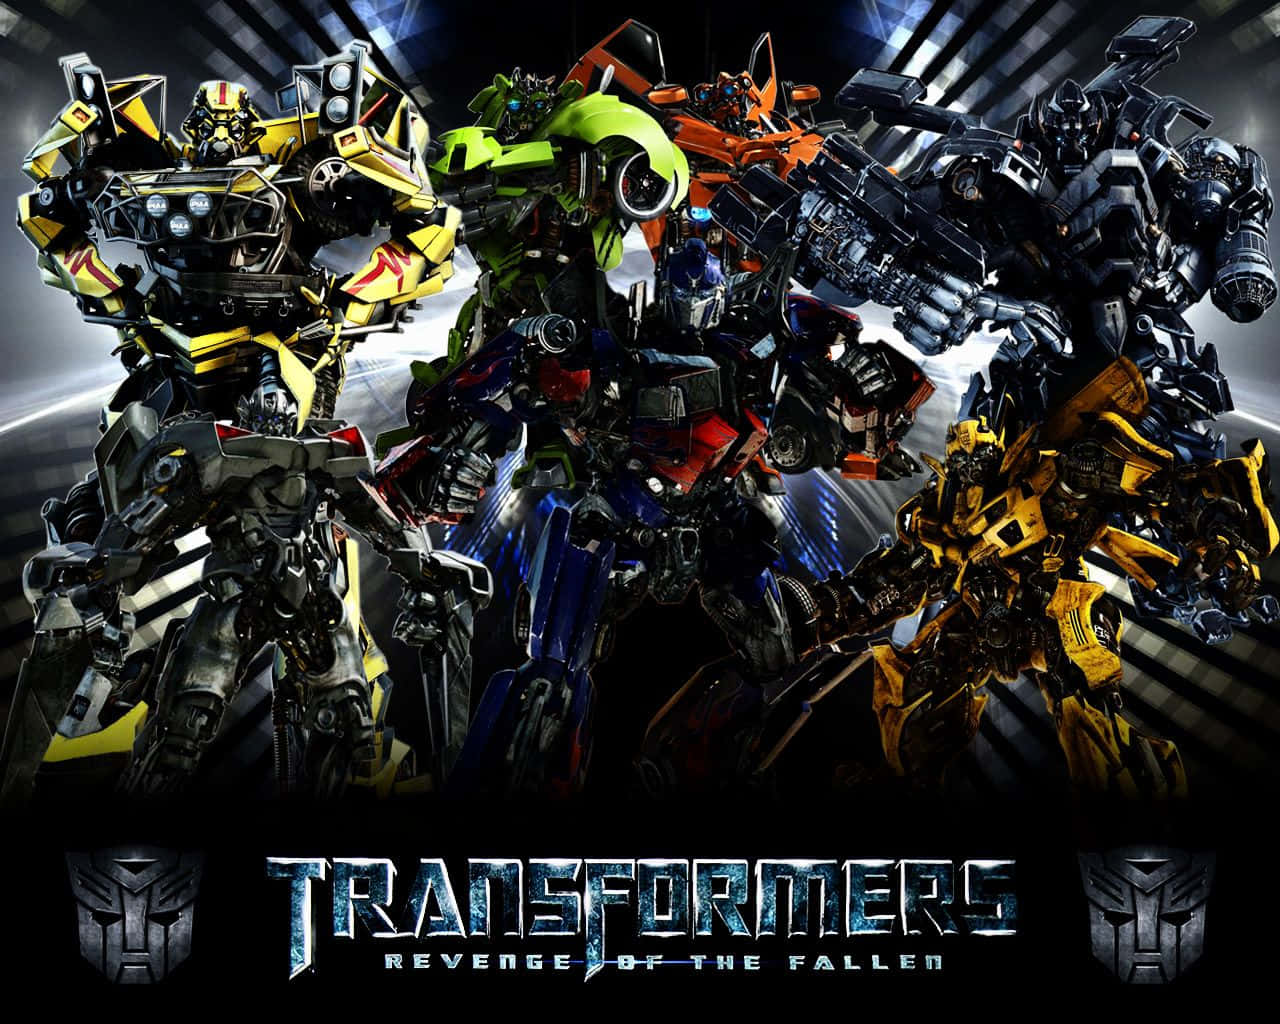 Transformersfilmplakaten.